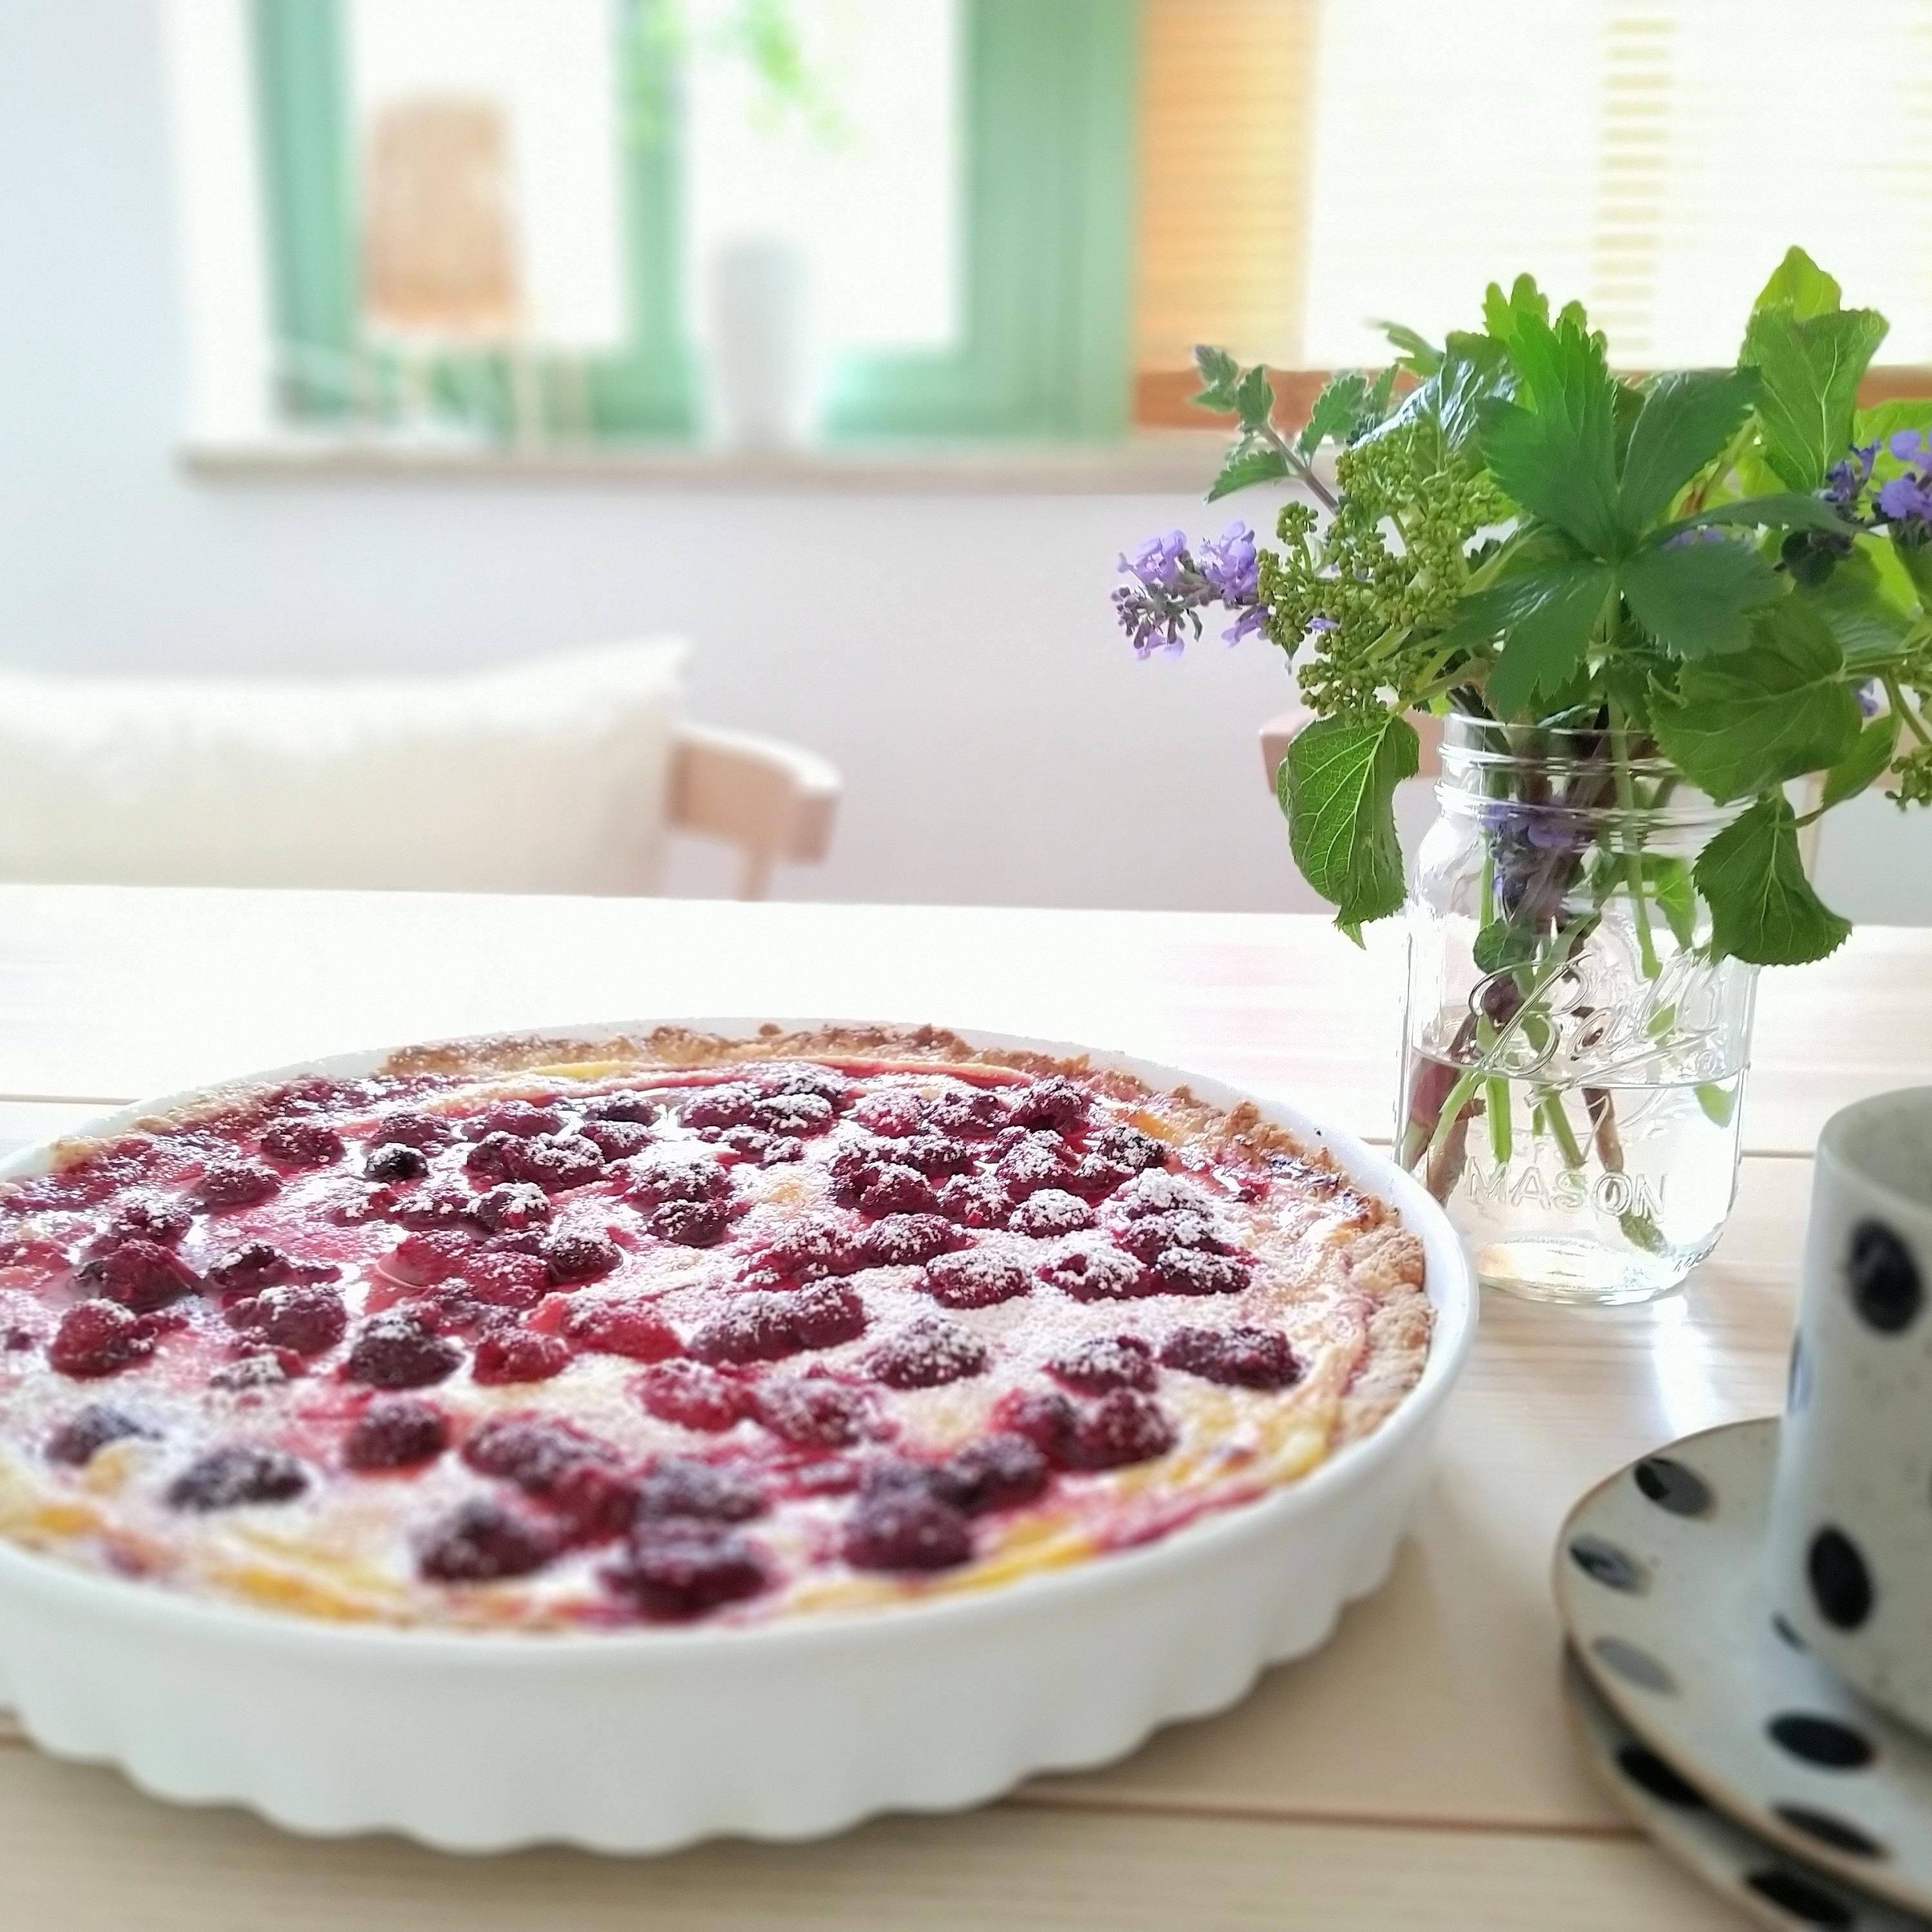 Himbeerhighlight 😋
#himbeertarte #kuchen #cake #esszimmer #livingroom #esszimmer #freshflowers #keramik